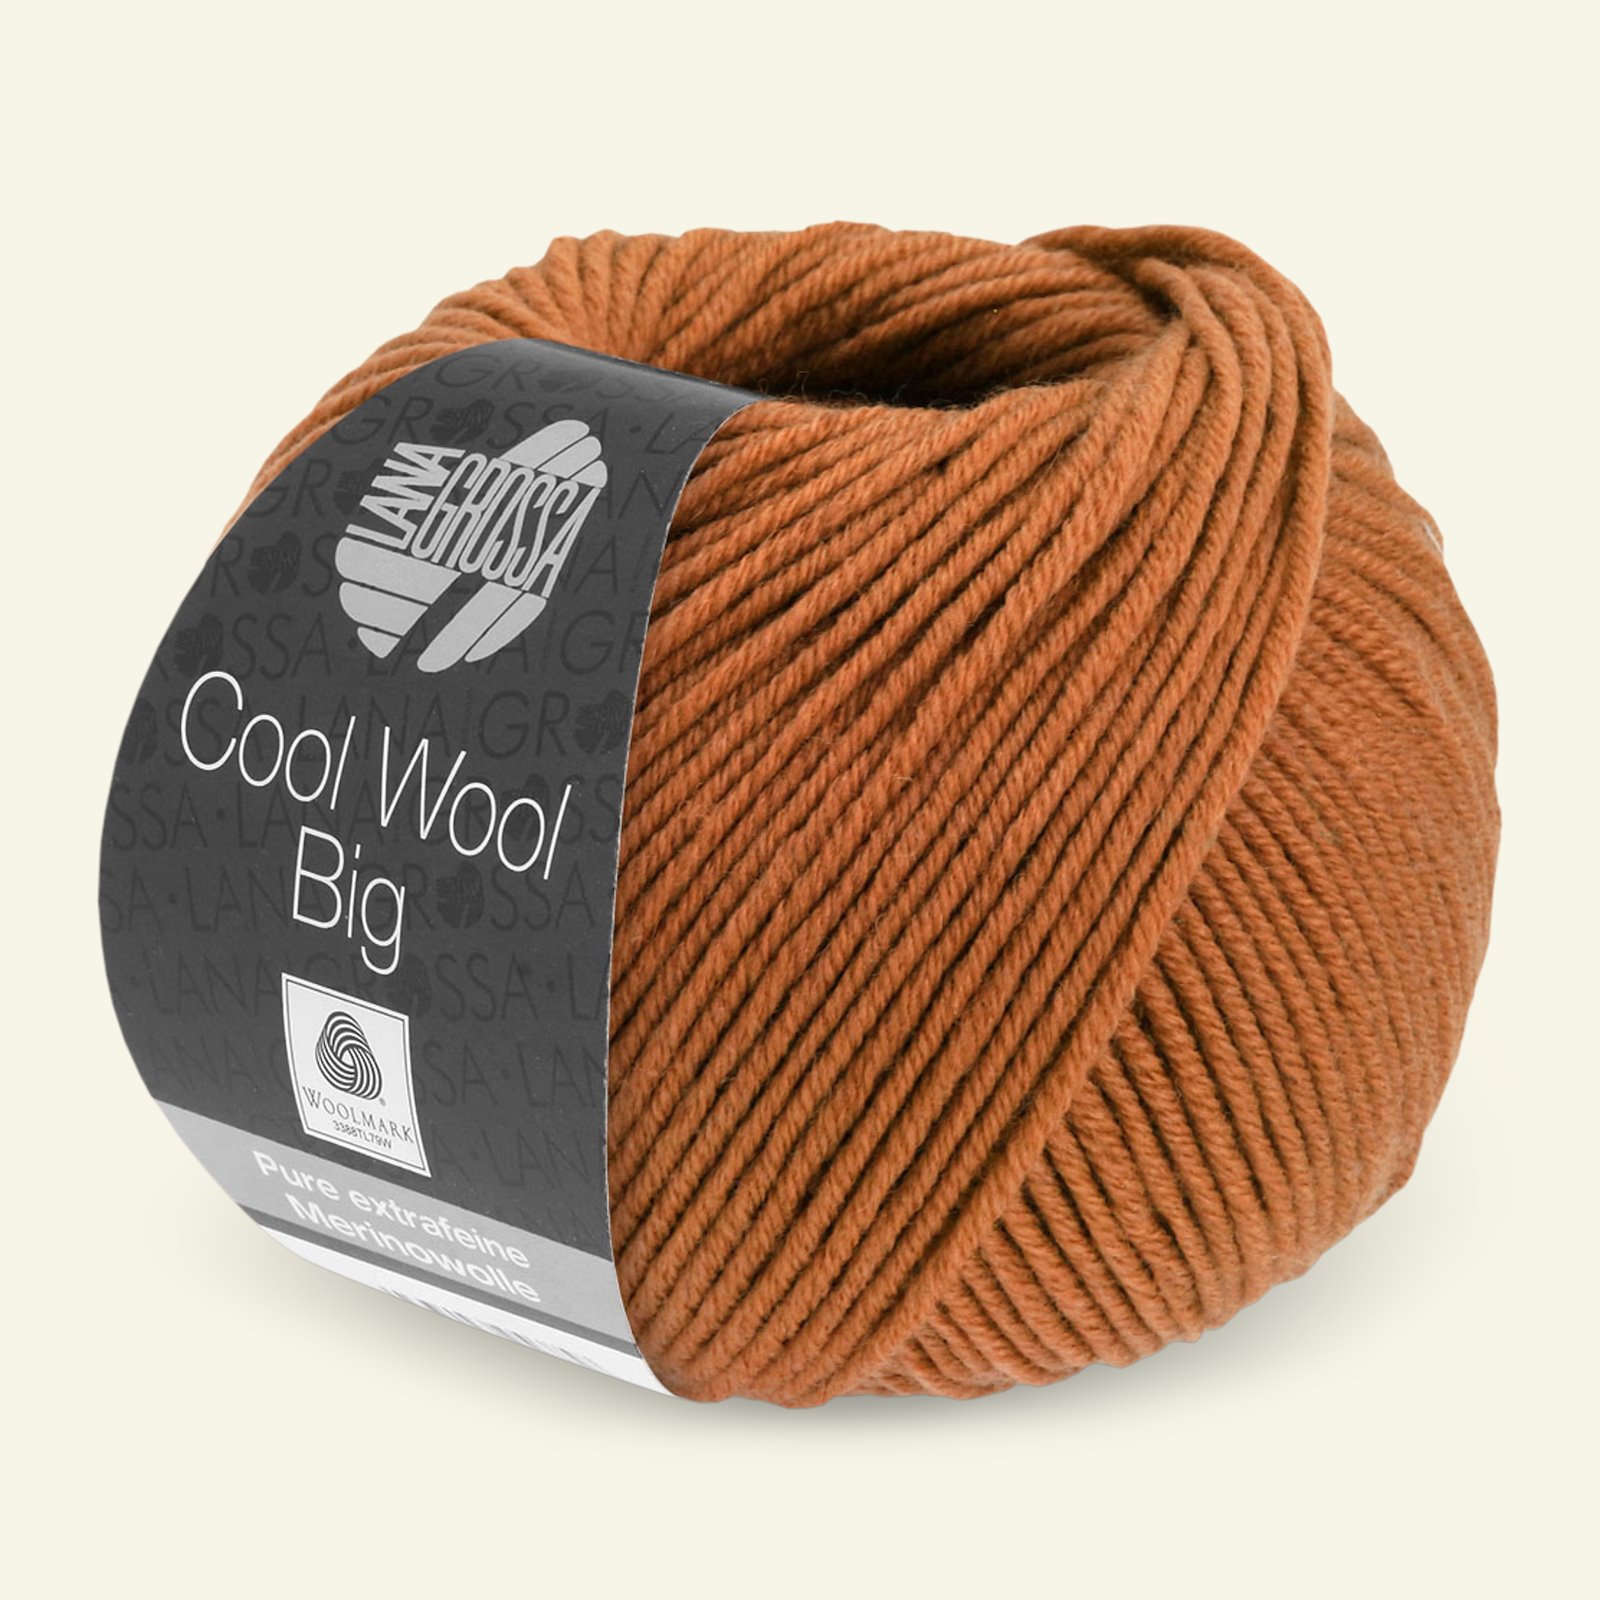 Lana Grossa, extrafine merino wool yarn "Cool Wool Big", rust 90001098_pack